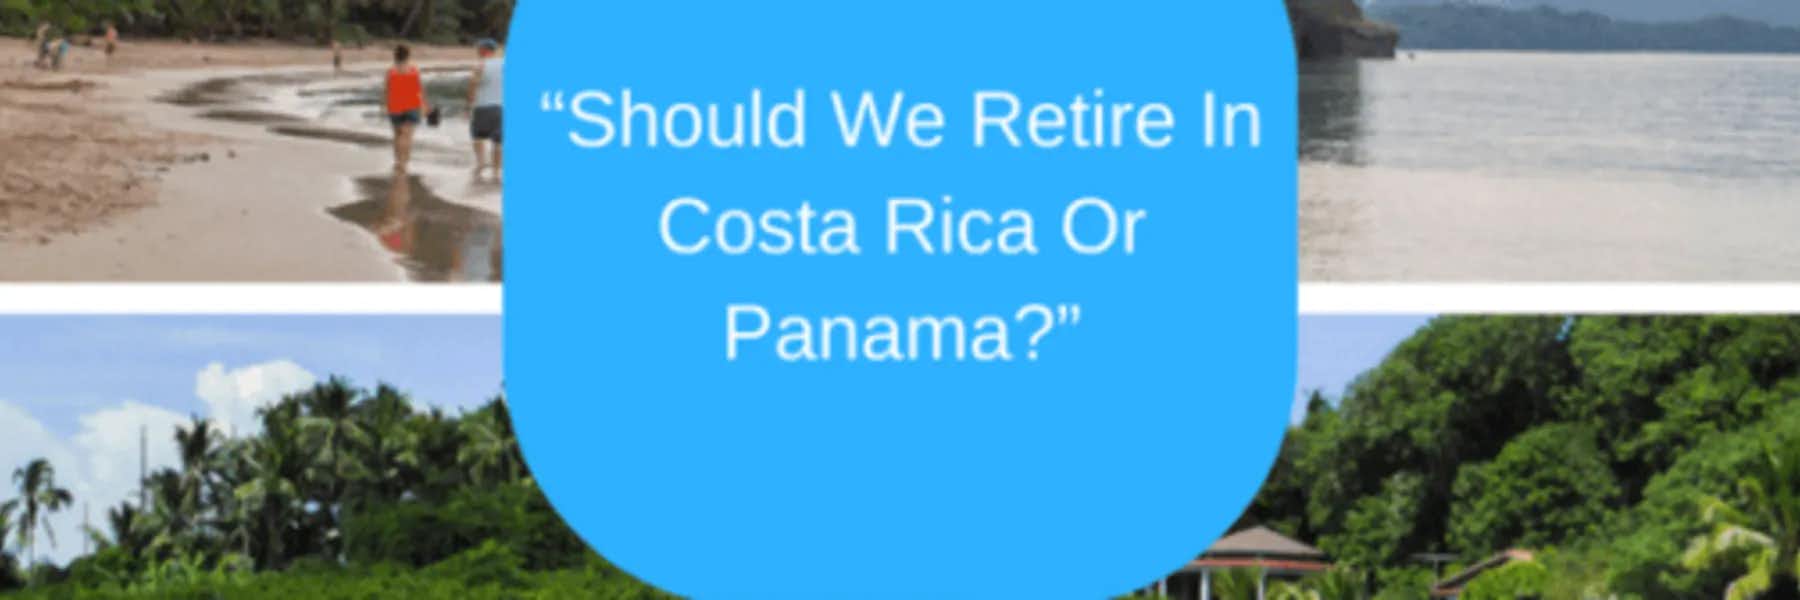 Should We Retire In Costa Rica Or Panama